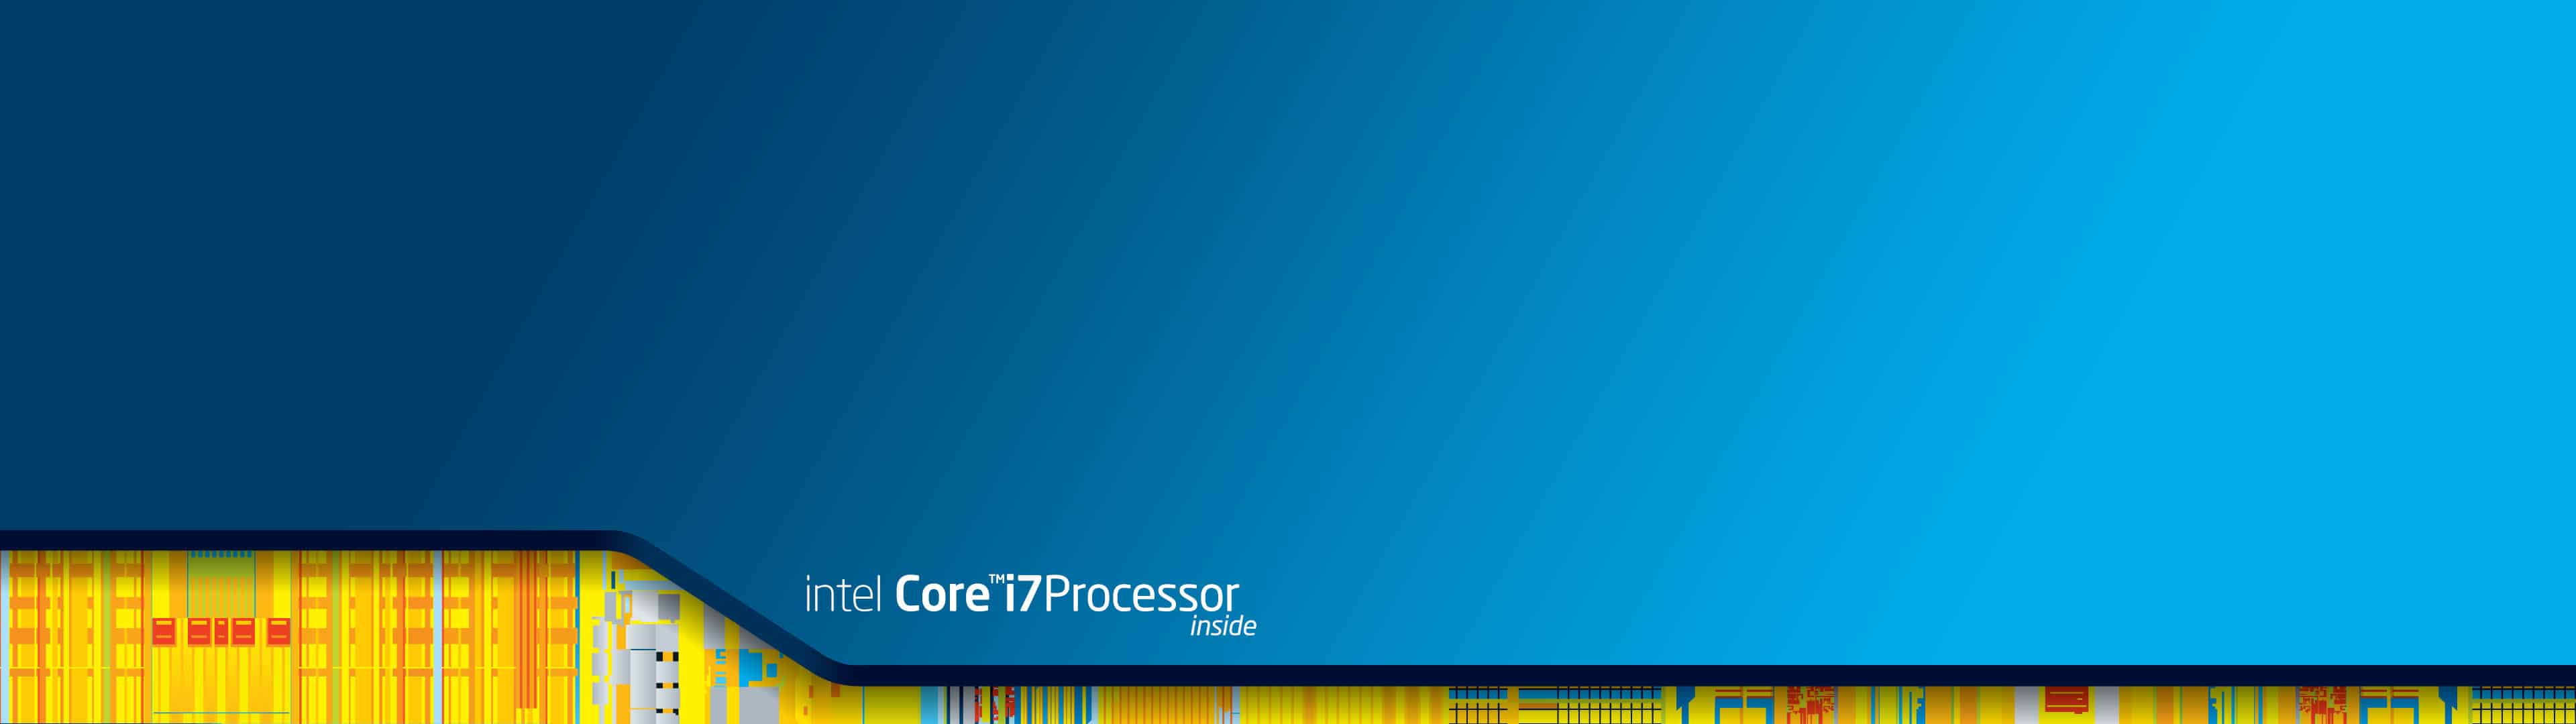 Intel Core I7 Processor Inside Dual Monitor Wallpaper Monitor Wallpaper Intel